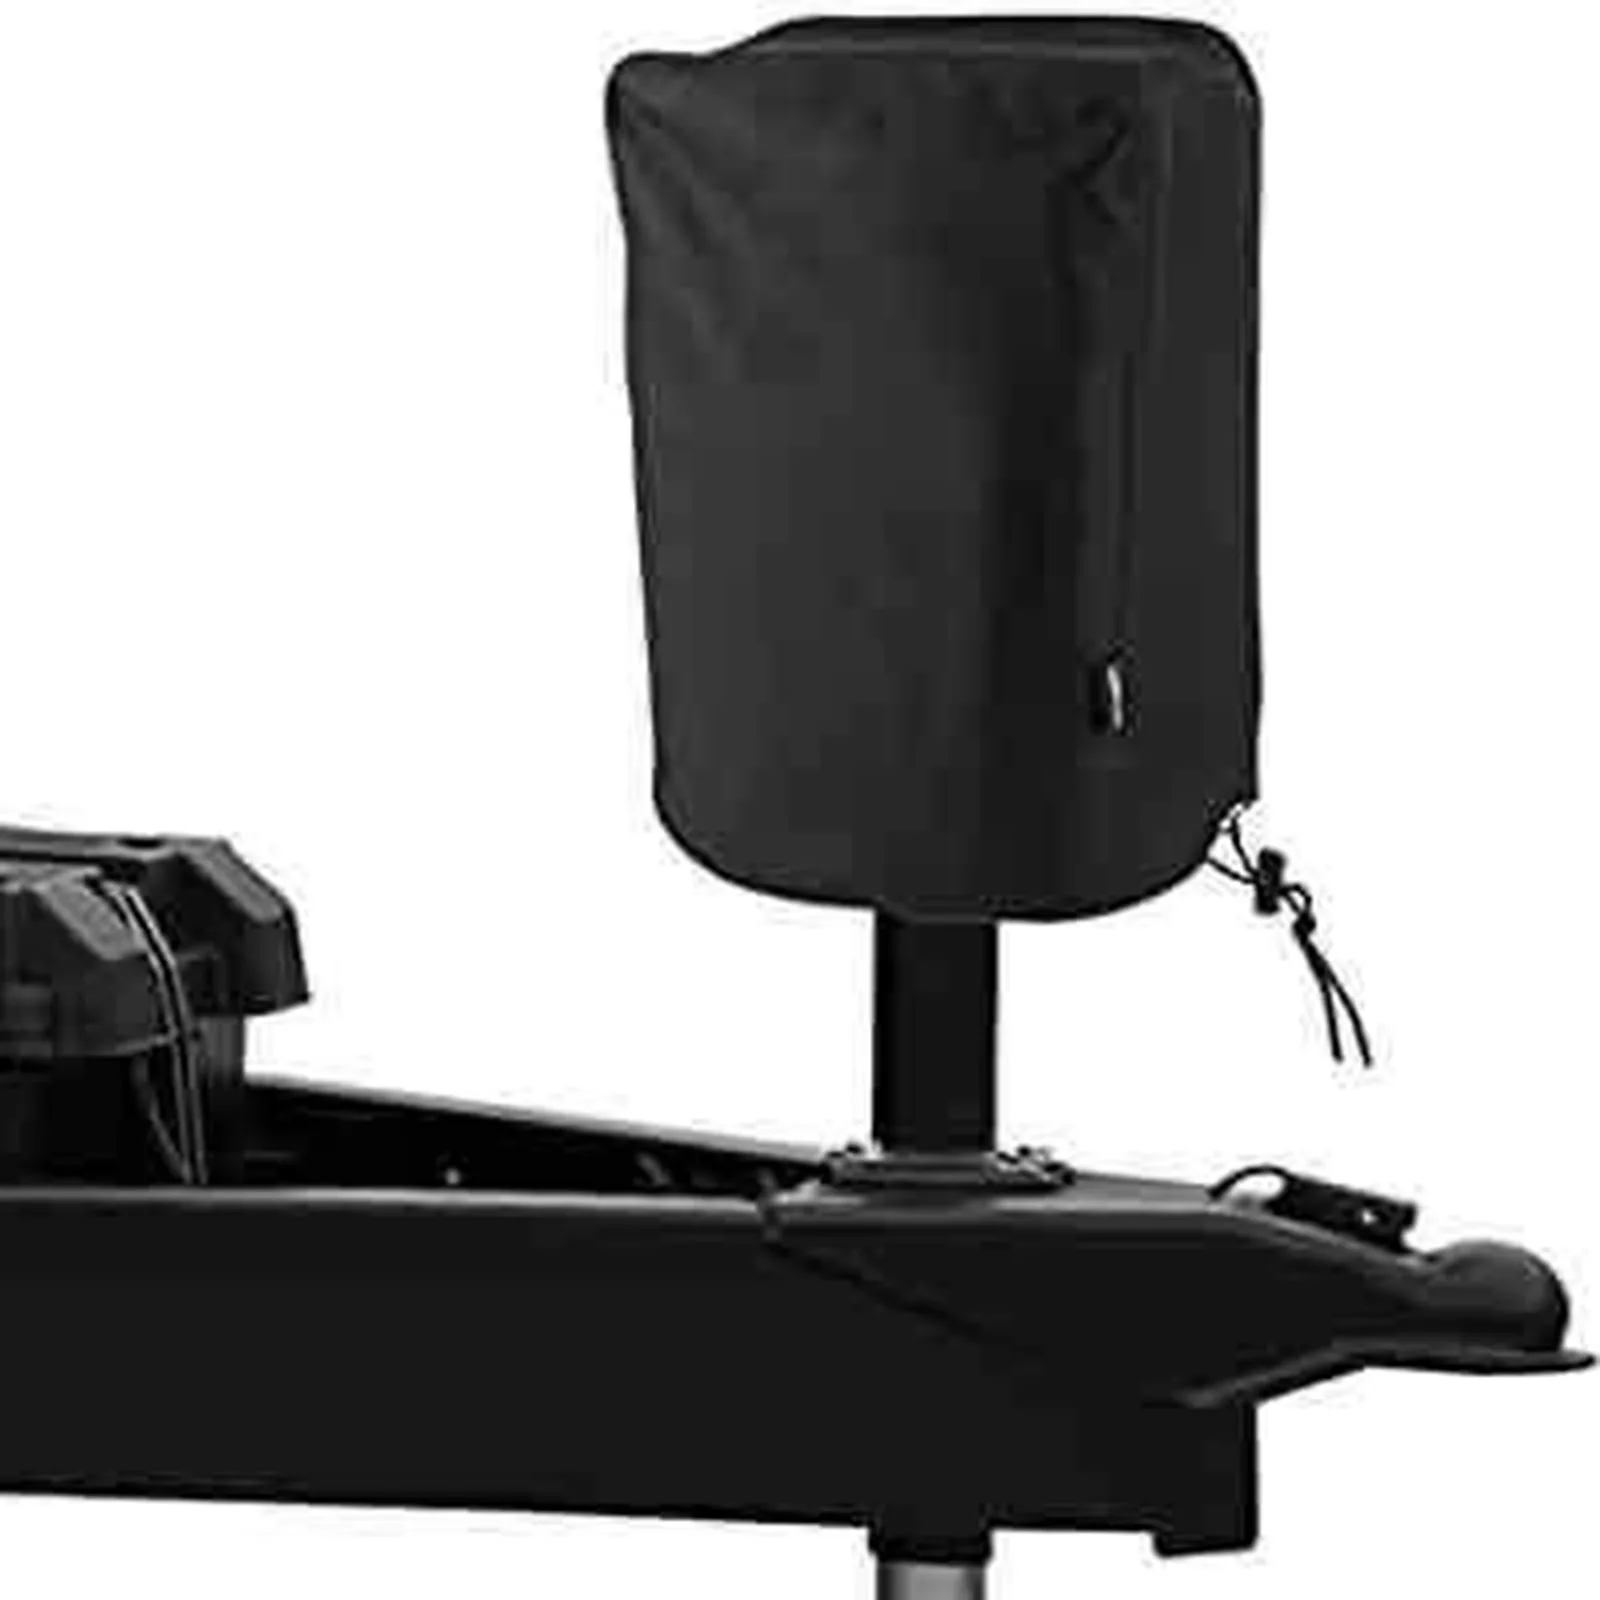 Universal RV Electric Tongue Jack Cover Protector for Travel Motorhome Trailer Camper Waterproof Dustproof